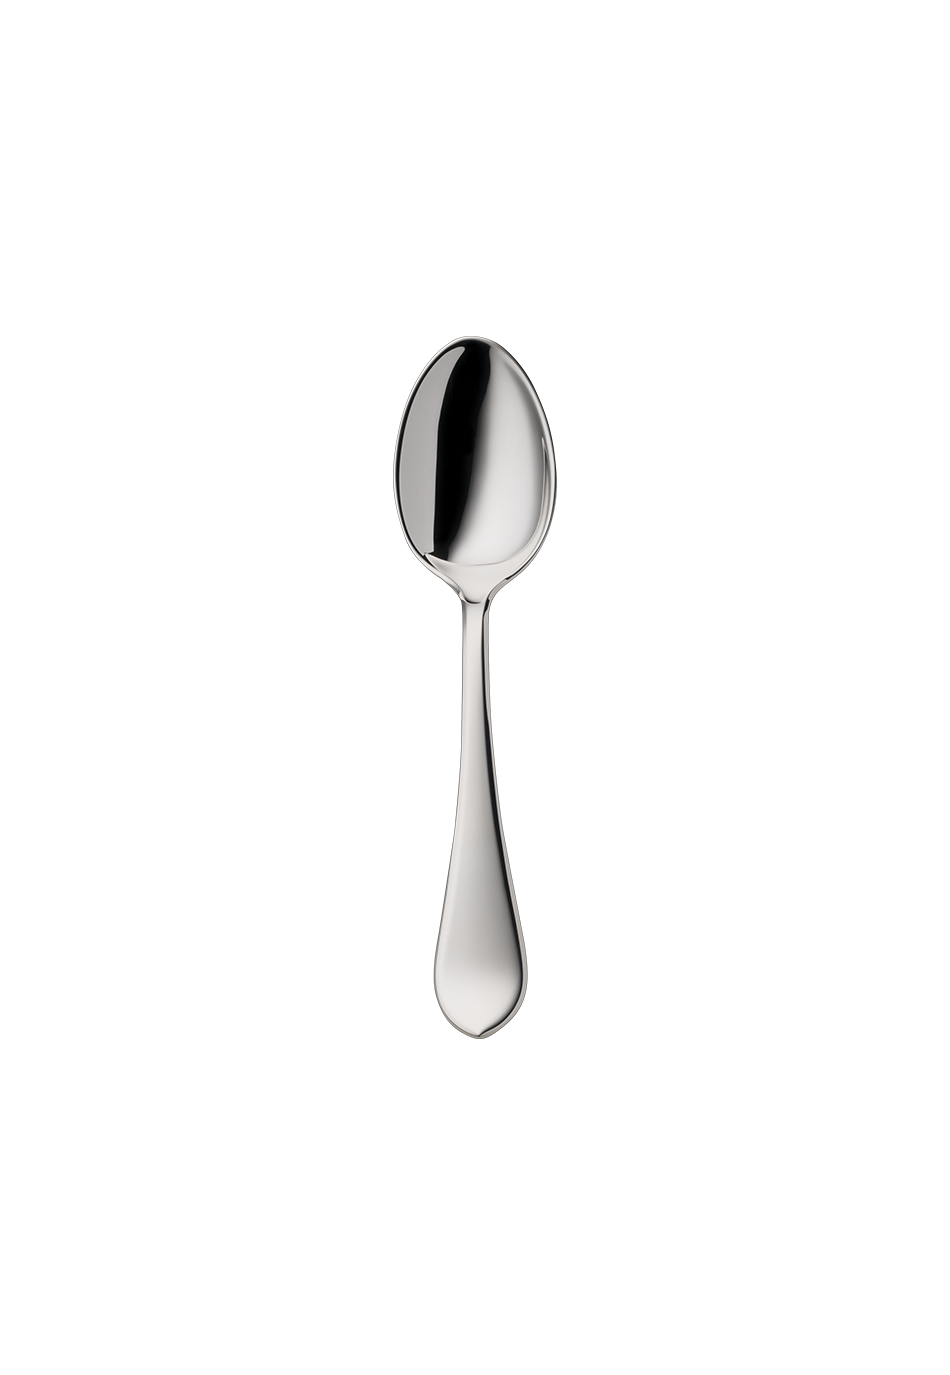 Eclipse Coffee Spoon 14,5 cm (150g massive silverplated)